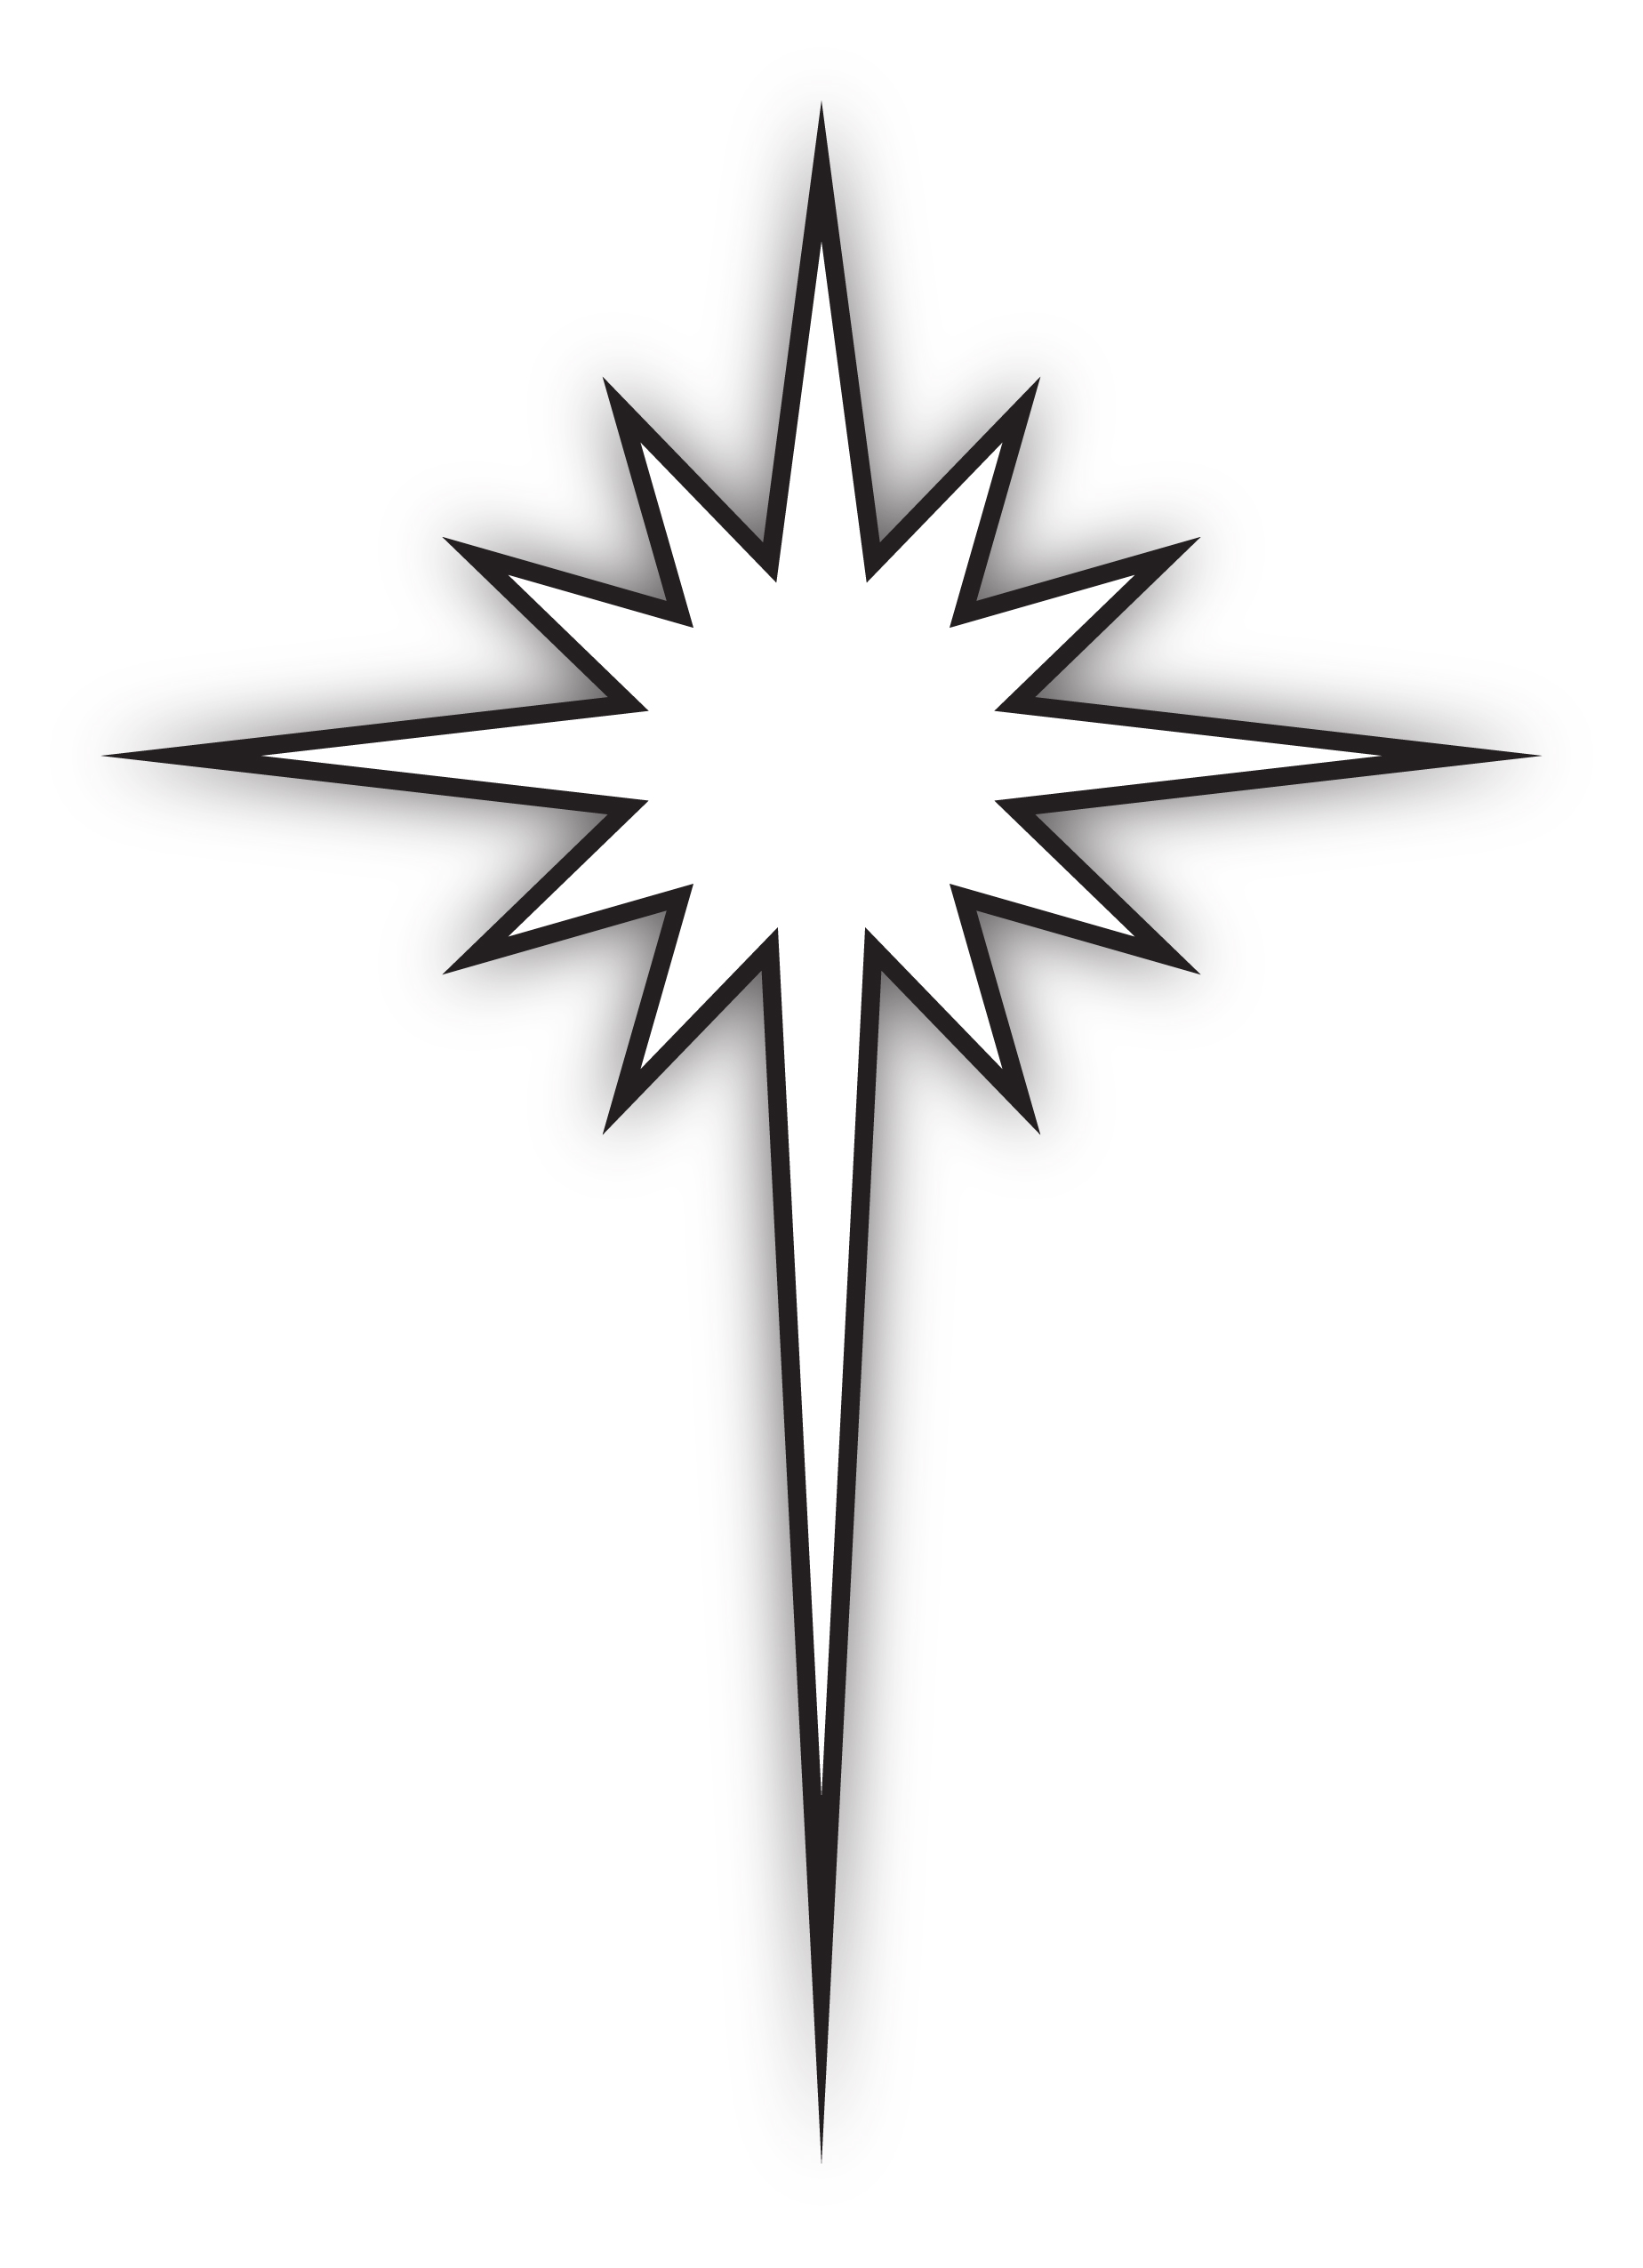 Star of Bethlehem #2: Wise me